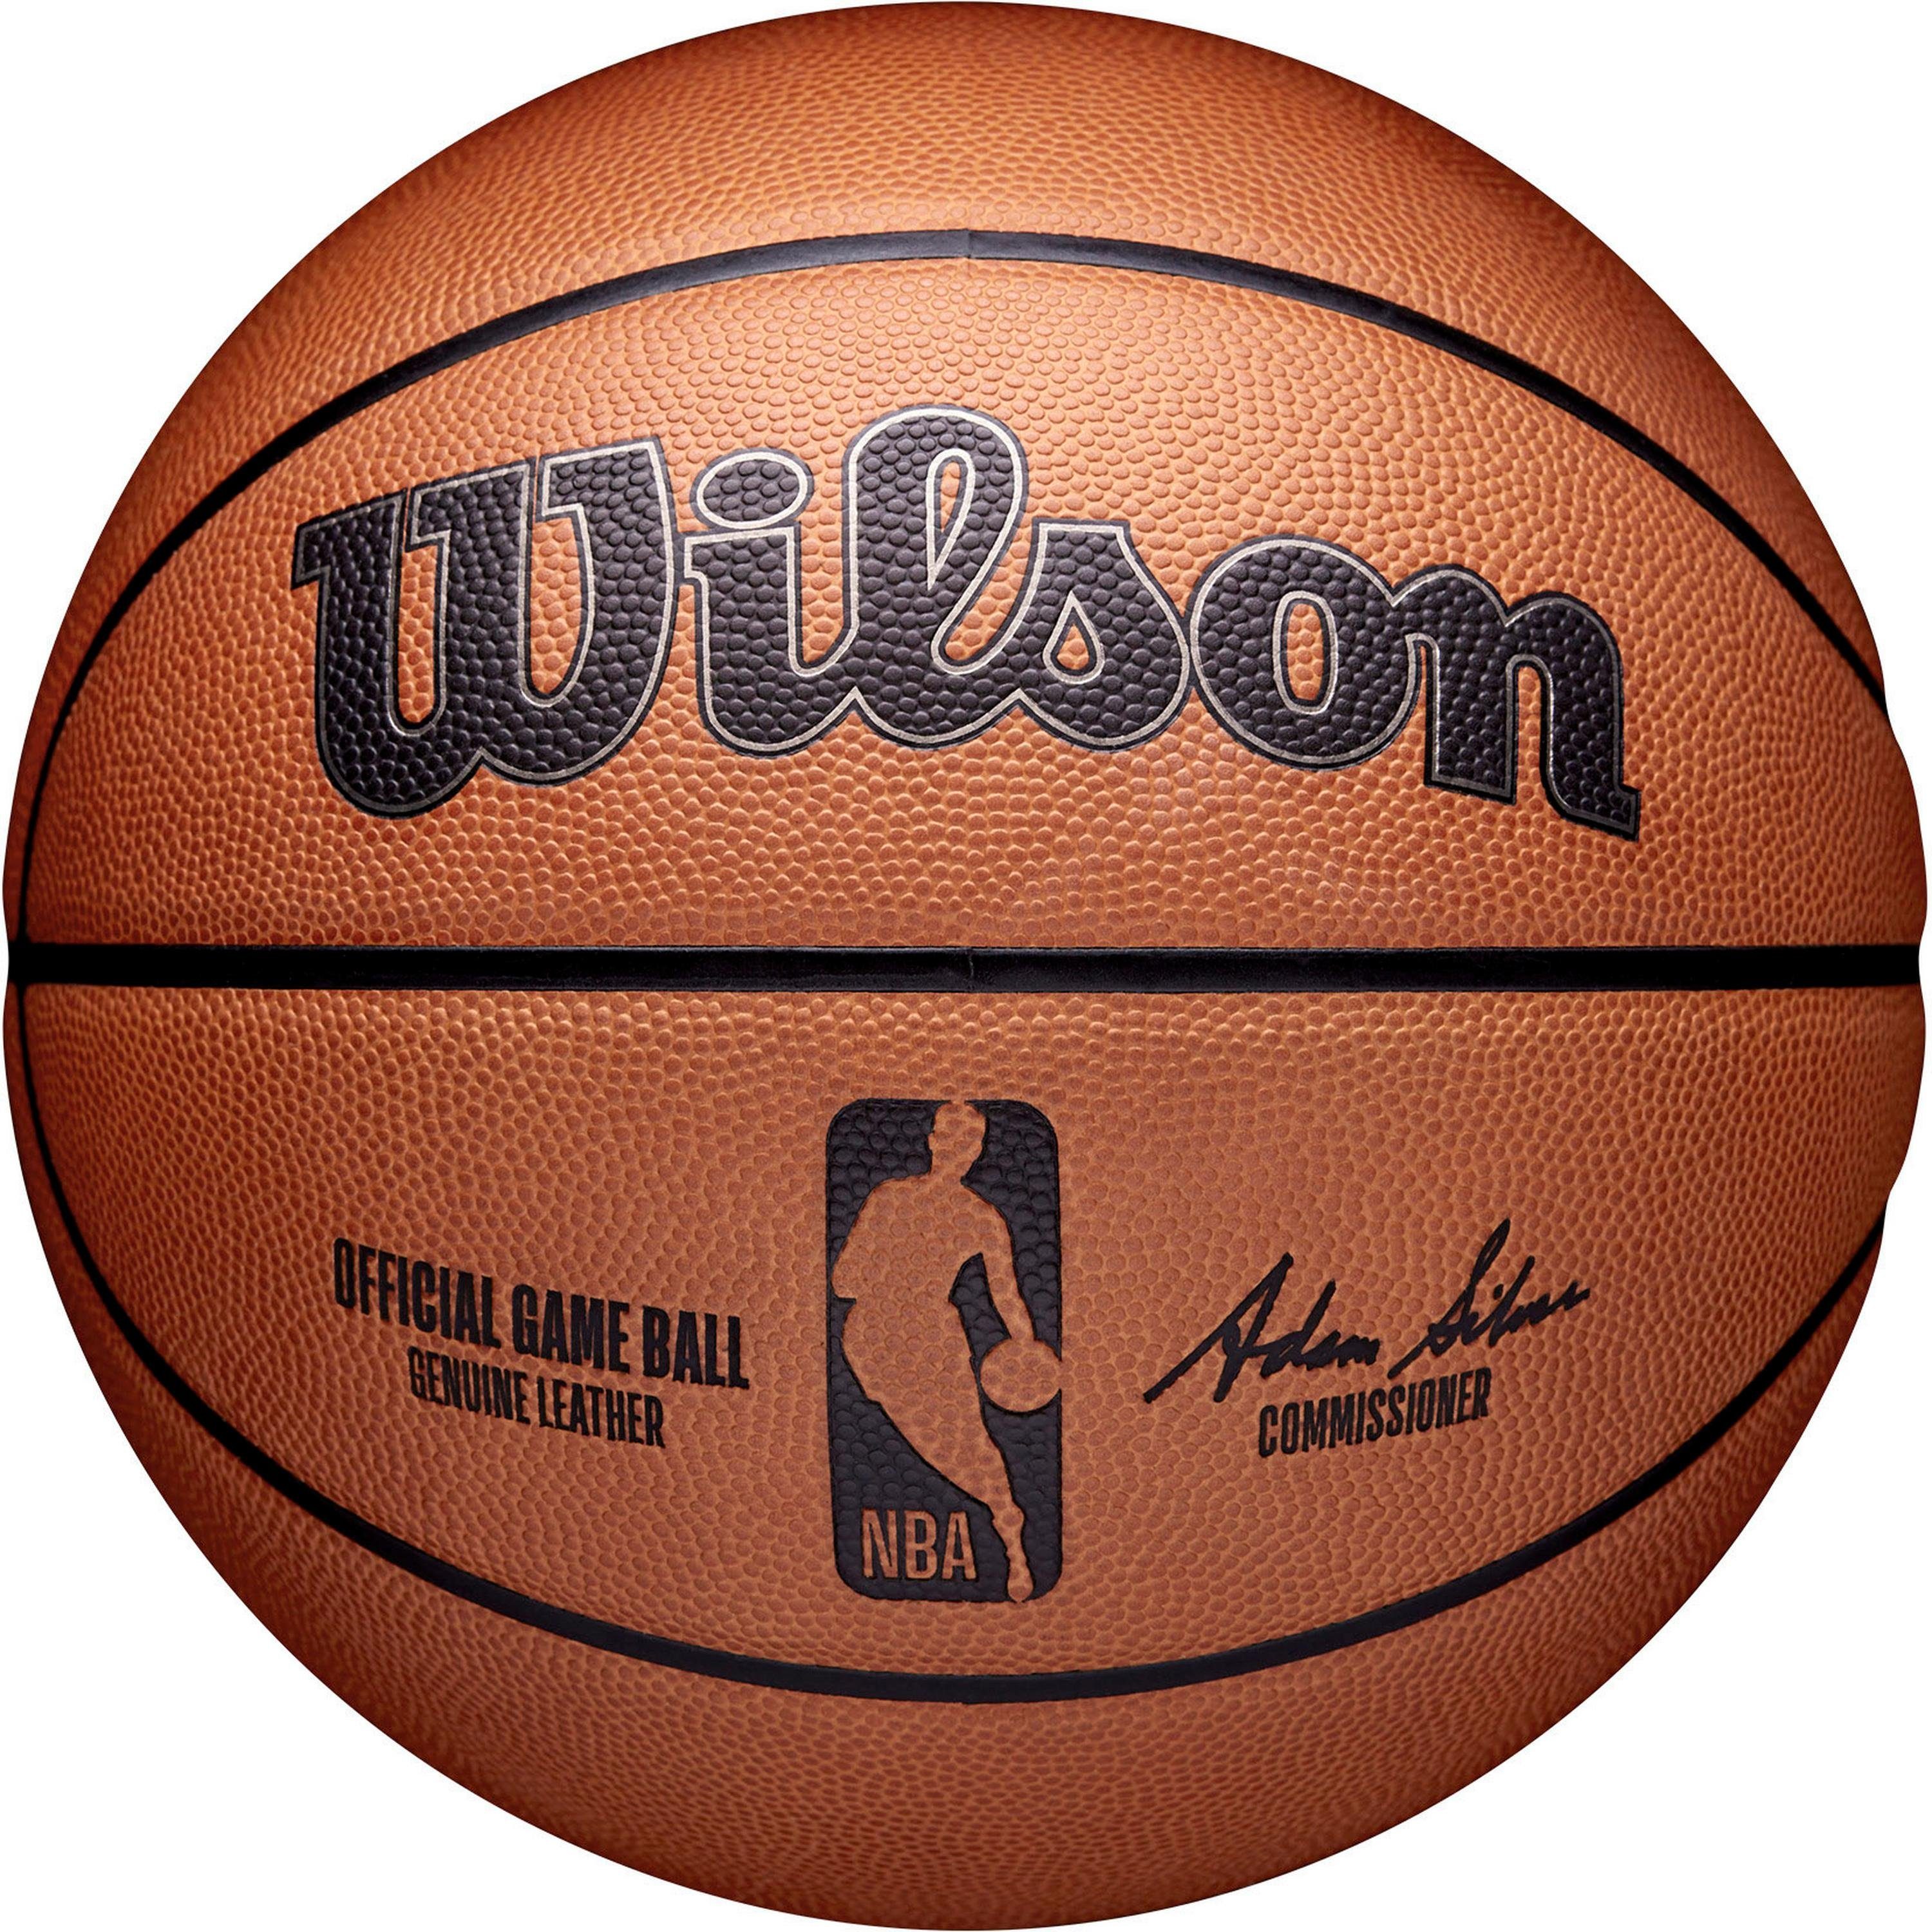 Wilson Basketball NBA OFFICIAL GAME BALL